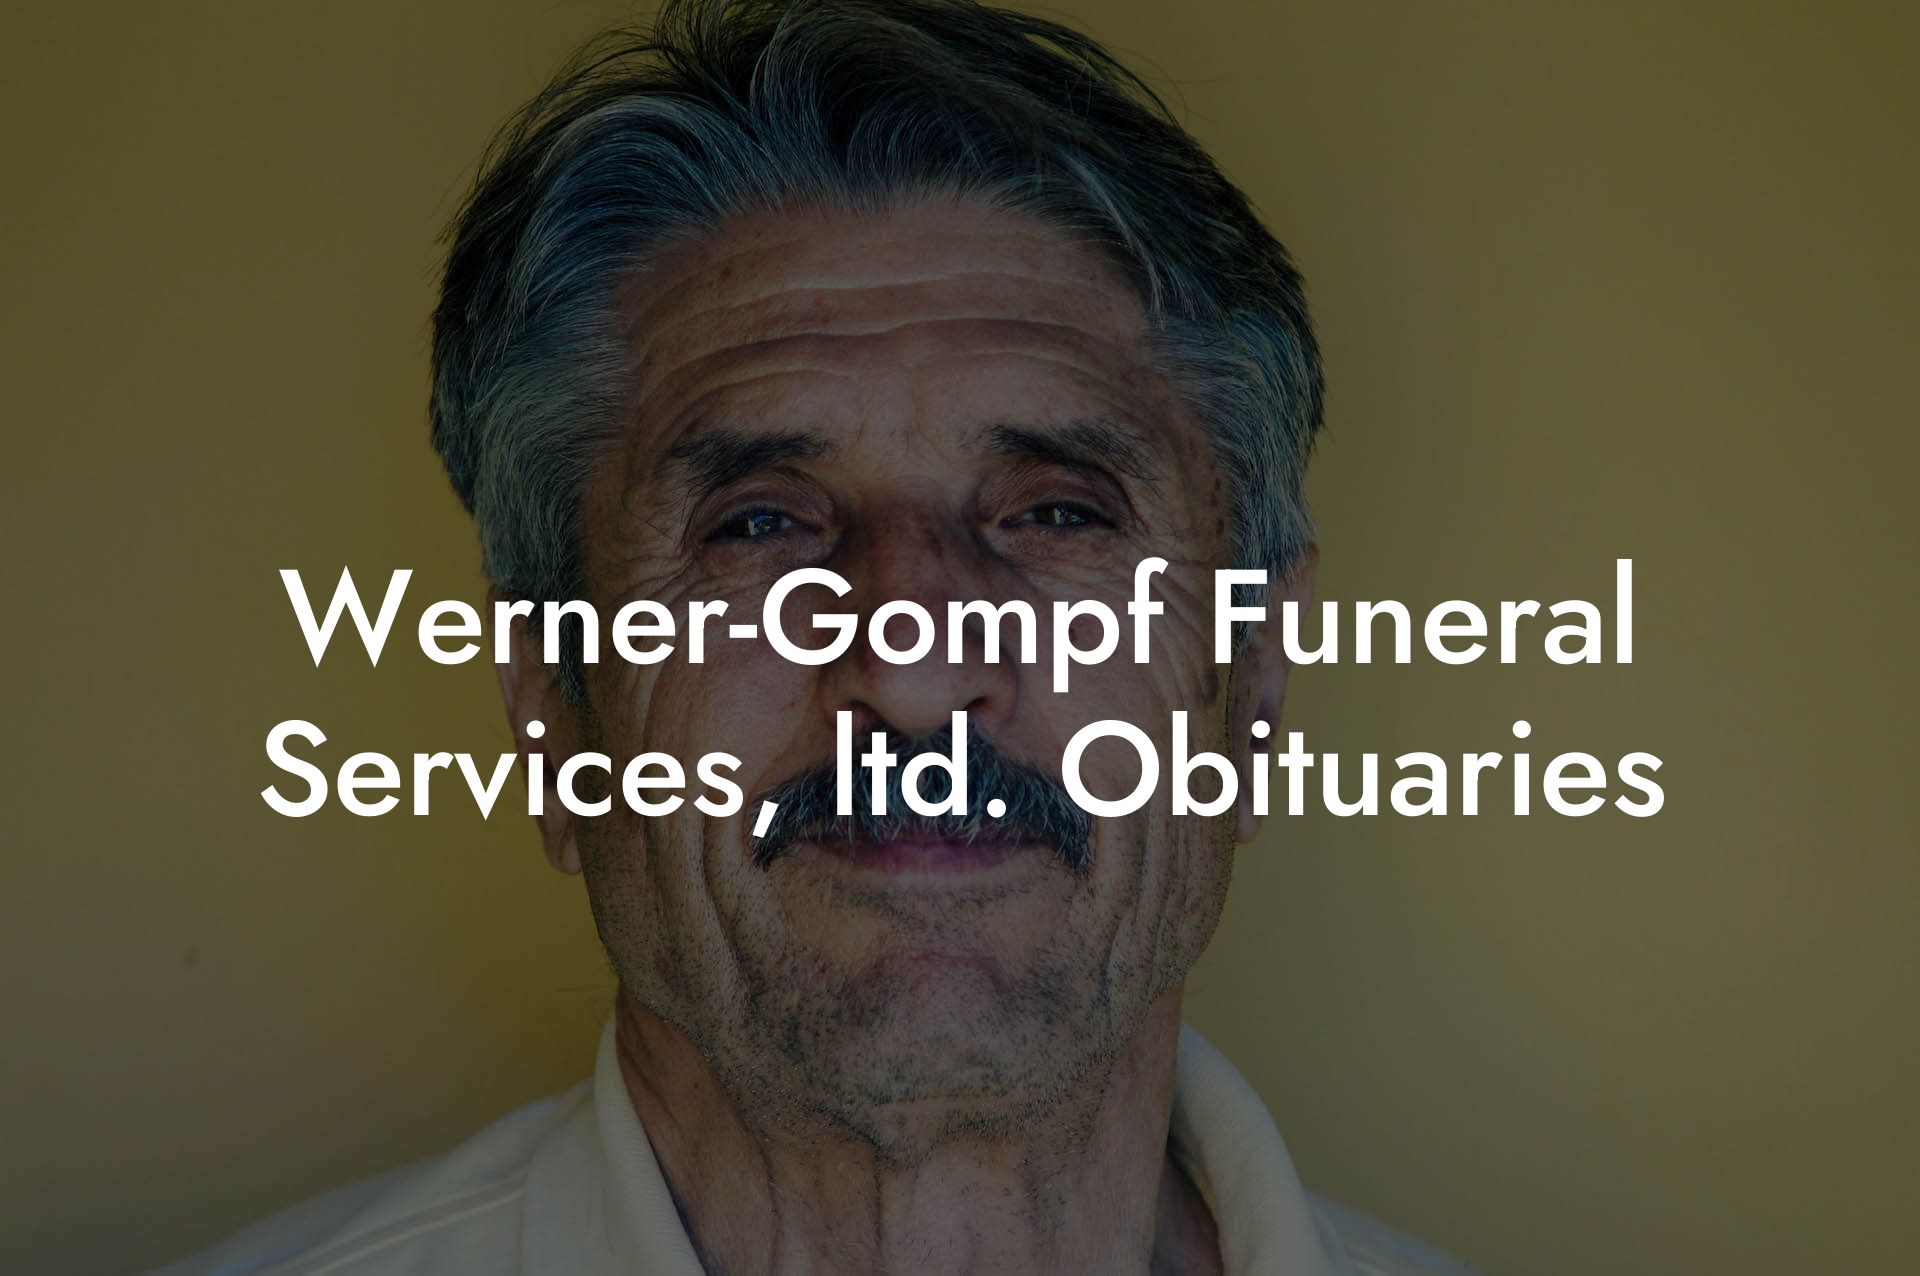 Werner-Gompf Funeral Services, ltd. Obituaries